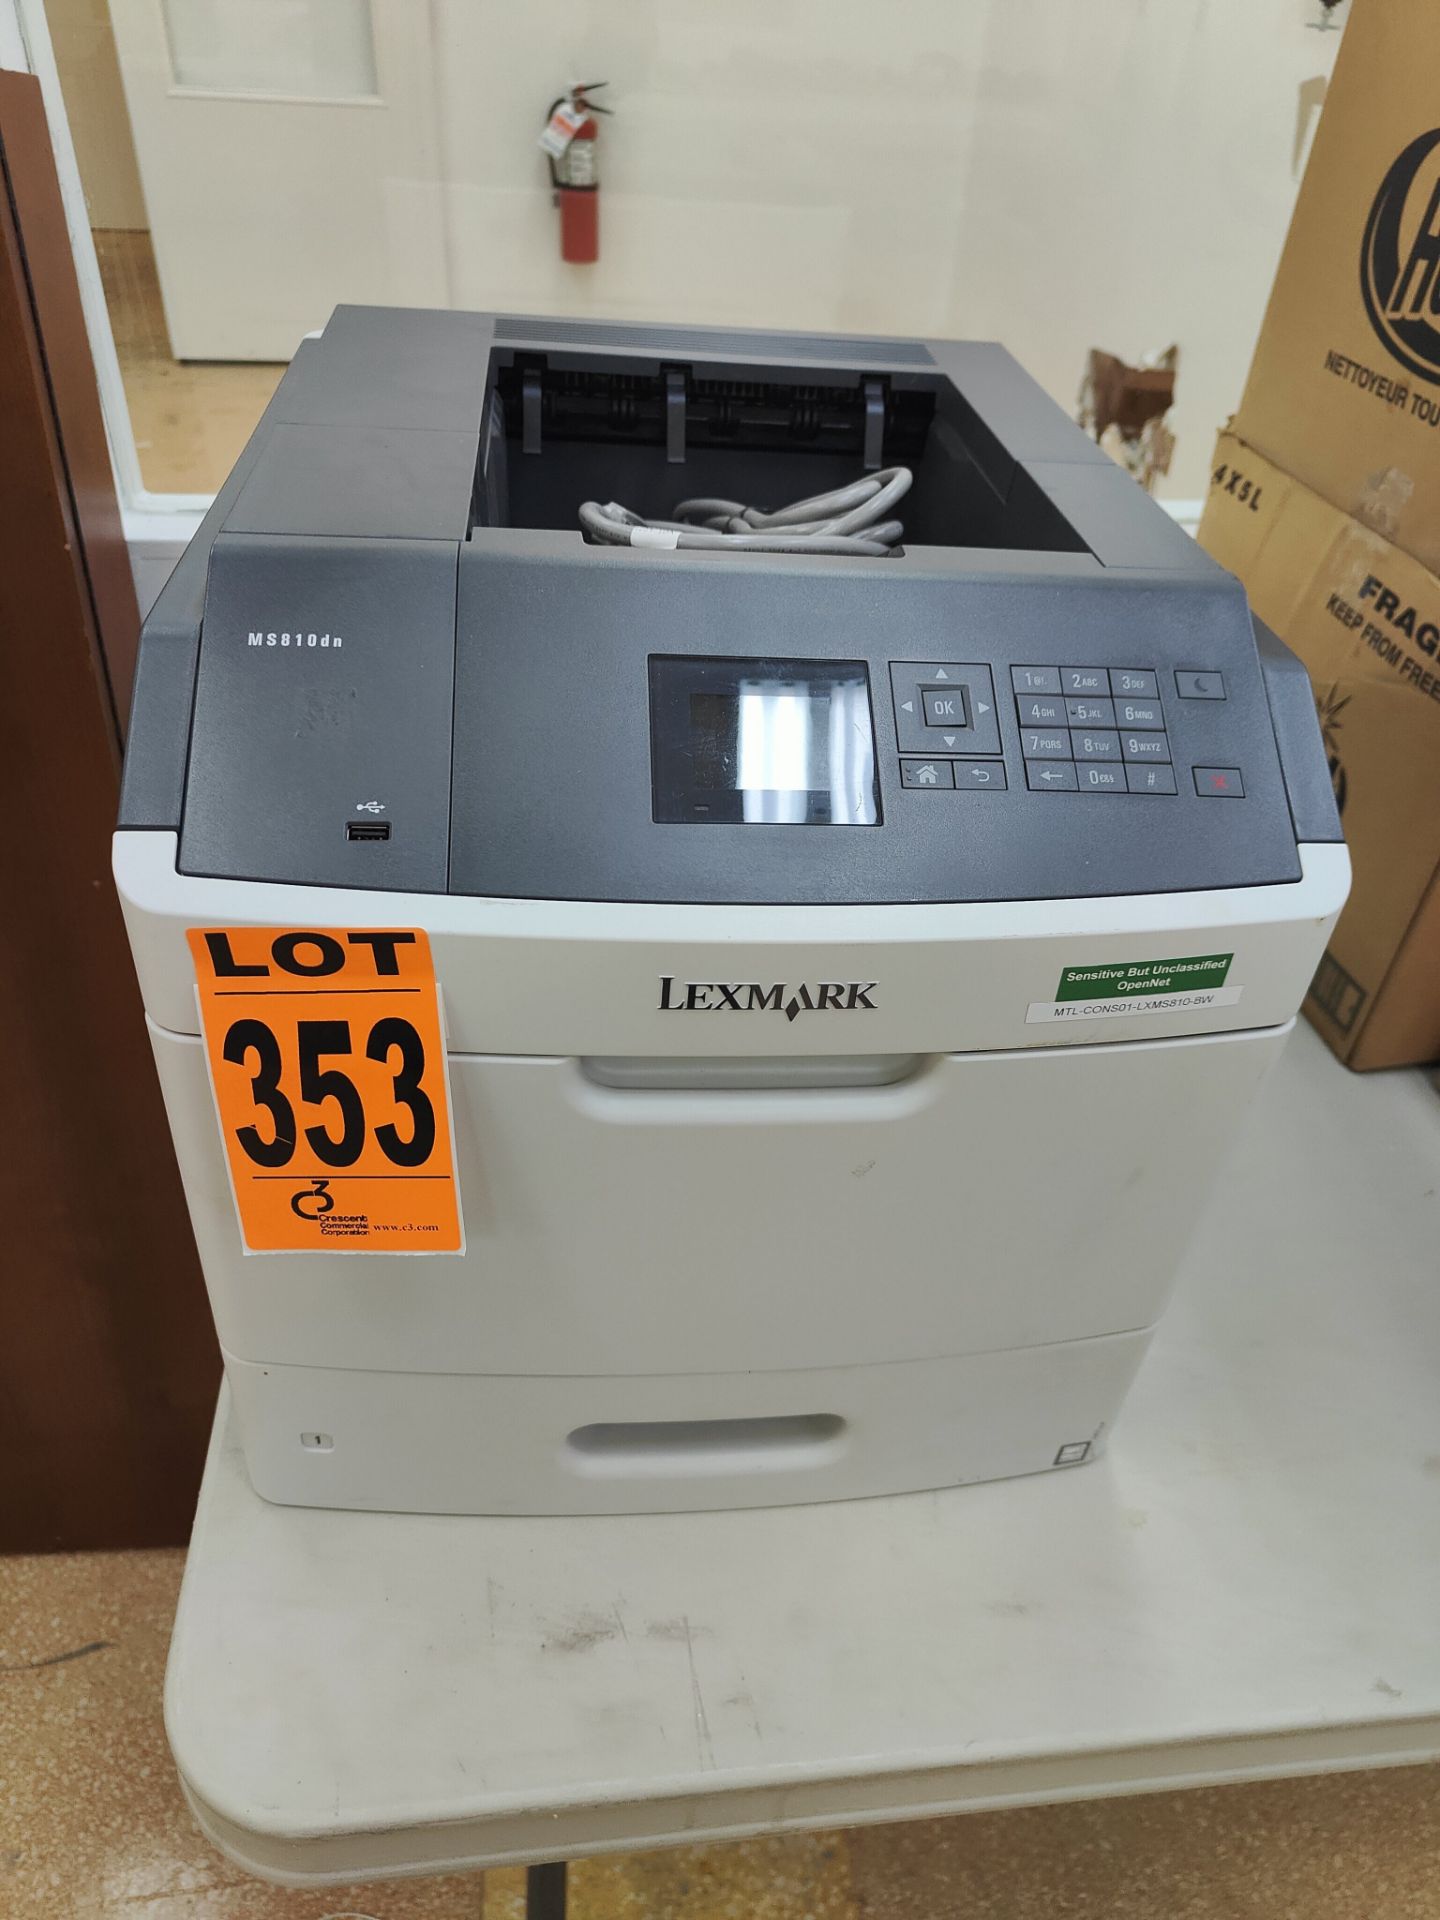 LEXMARK Laser printer Mod. MS810DN